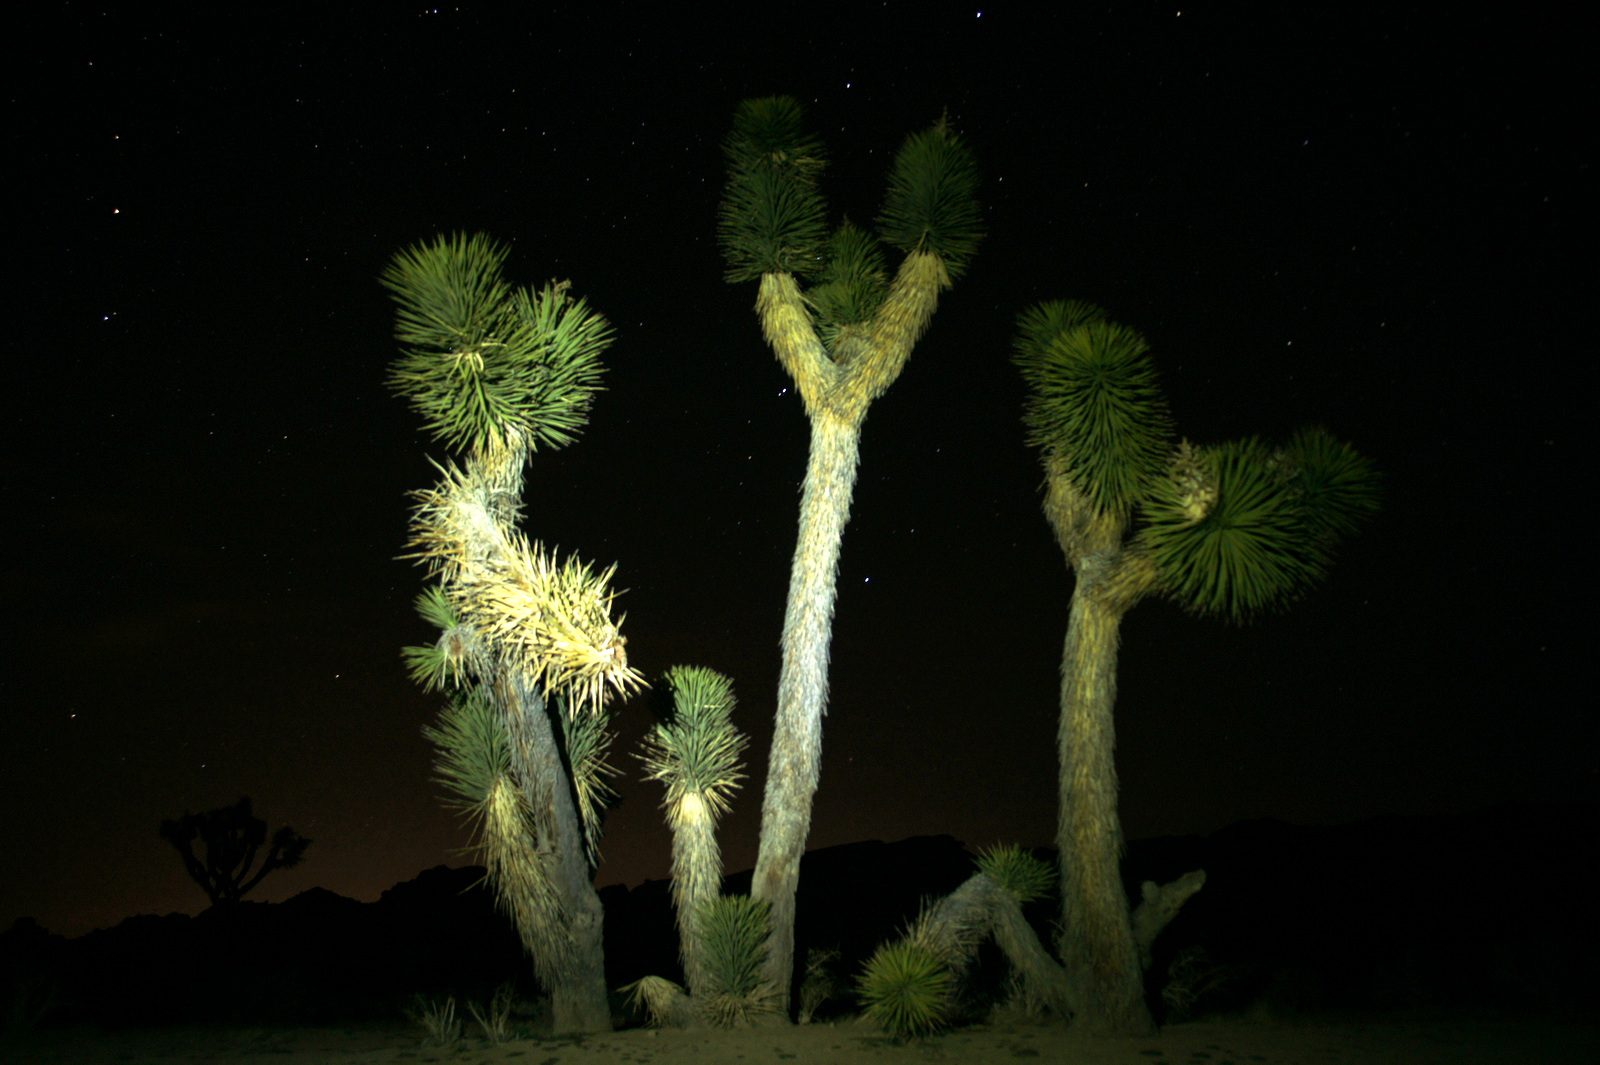 A starry night in Joshua Tree.